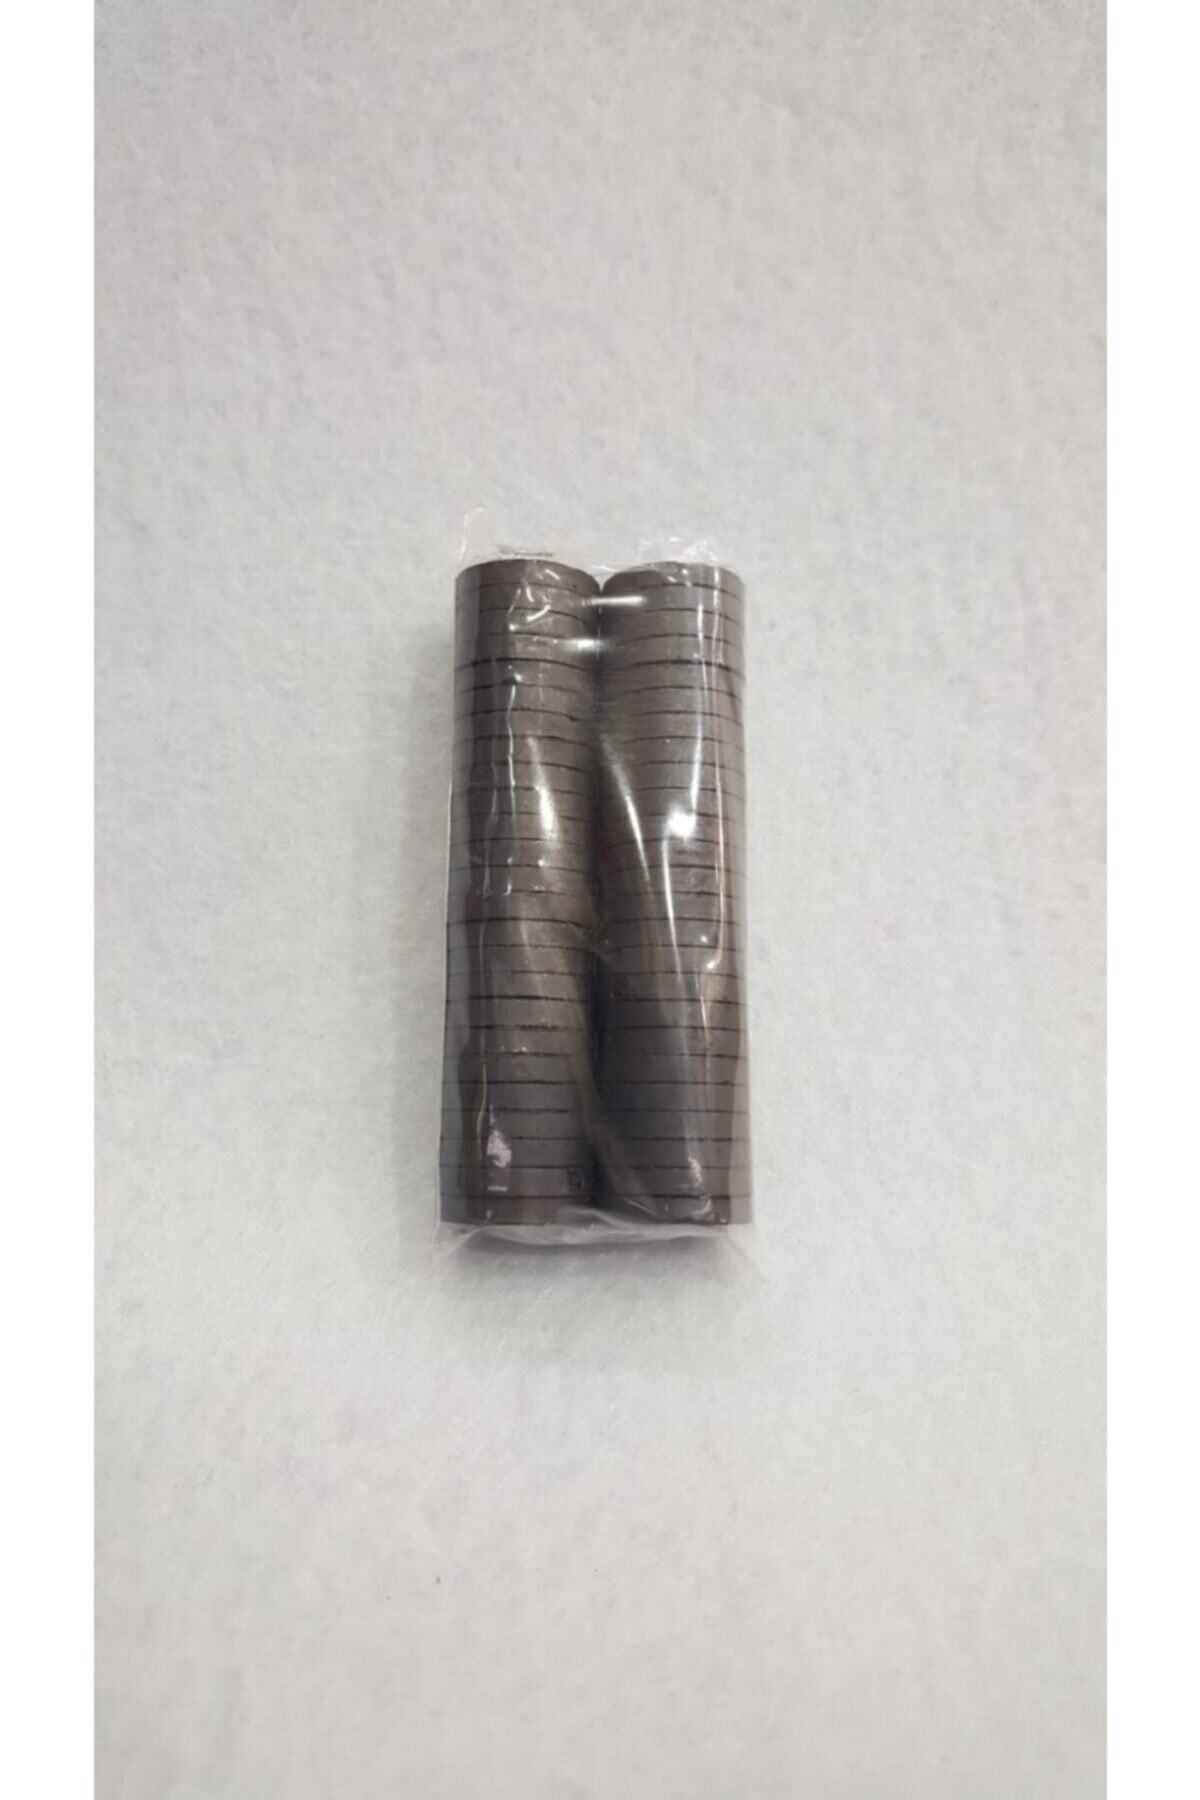 HİSARAKSESUAR Mıknatıs (magnet) 50'li Paket 1.5mm